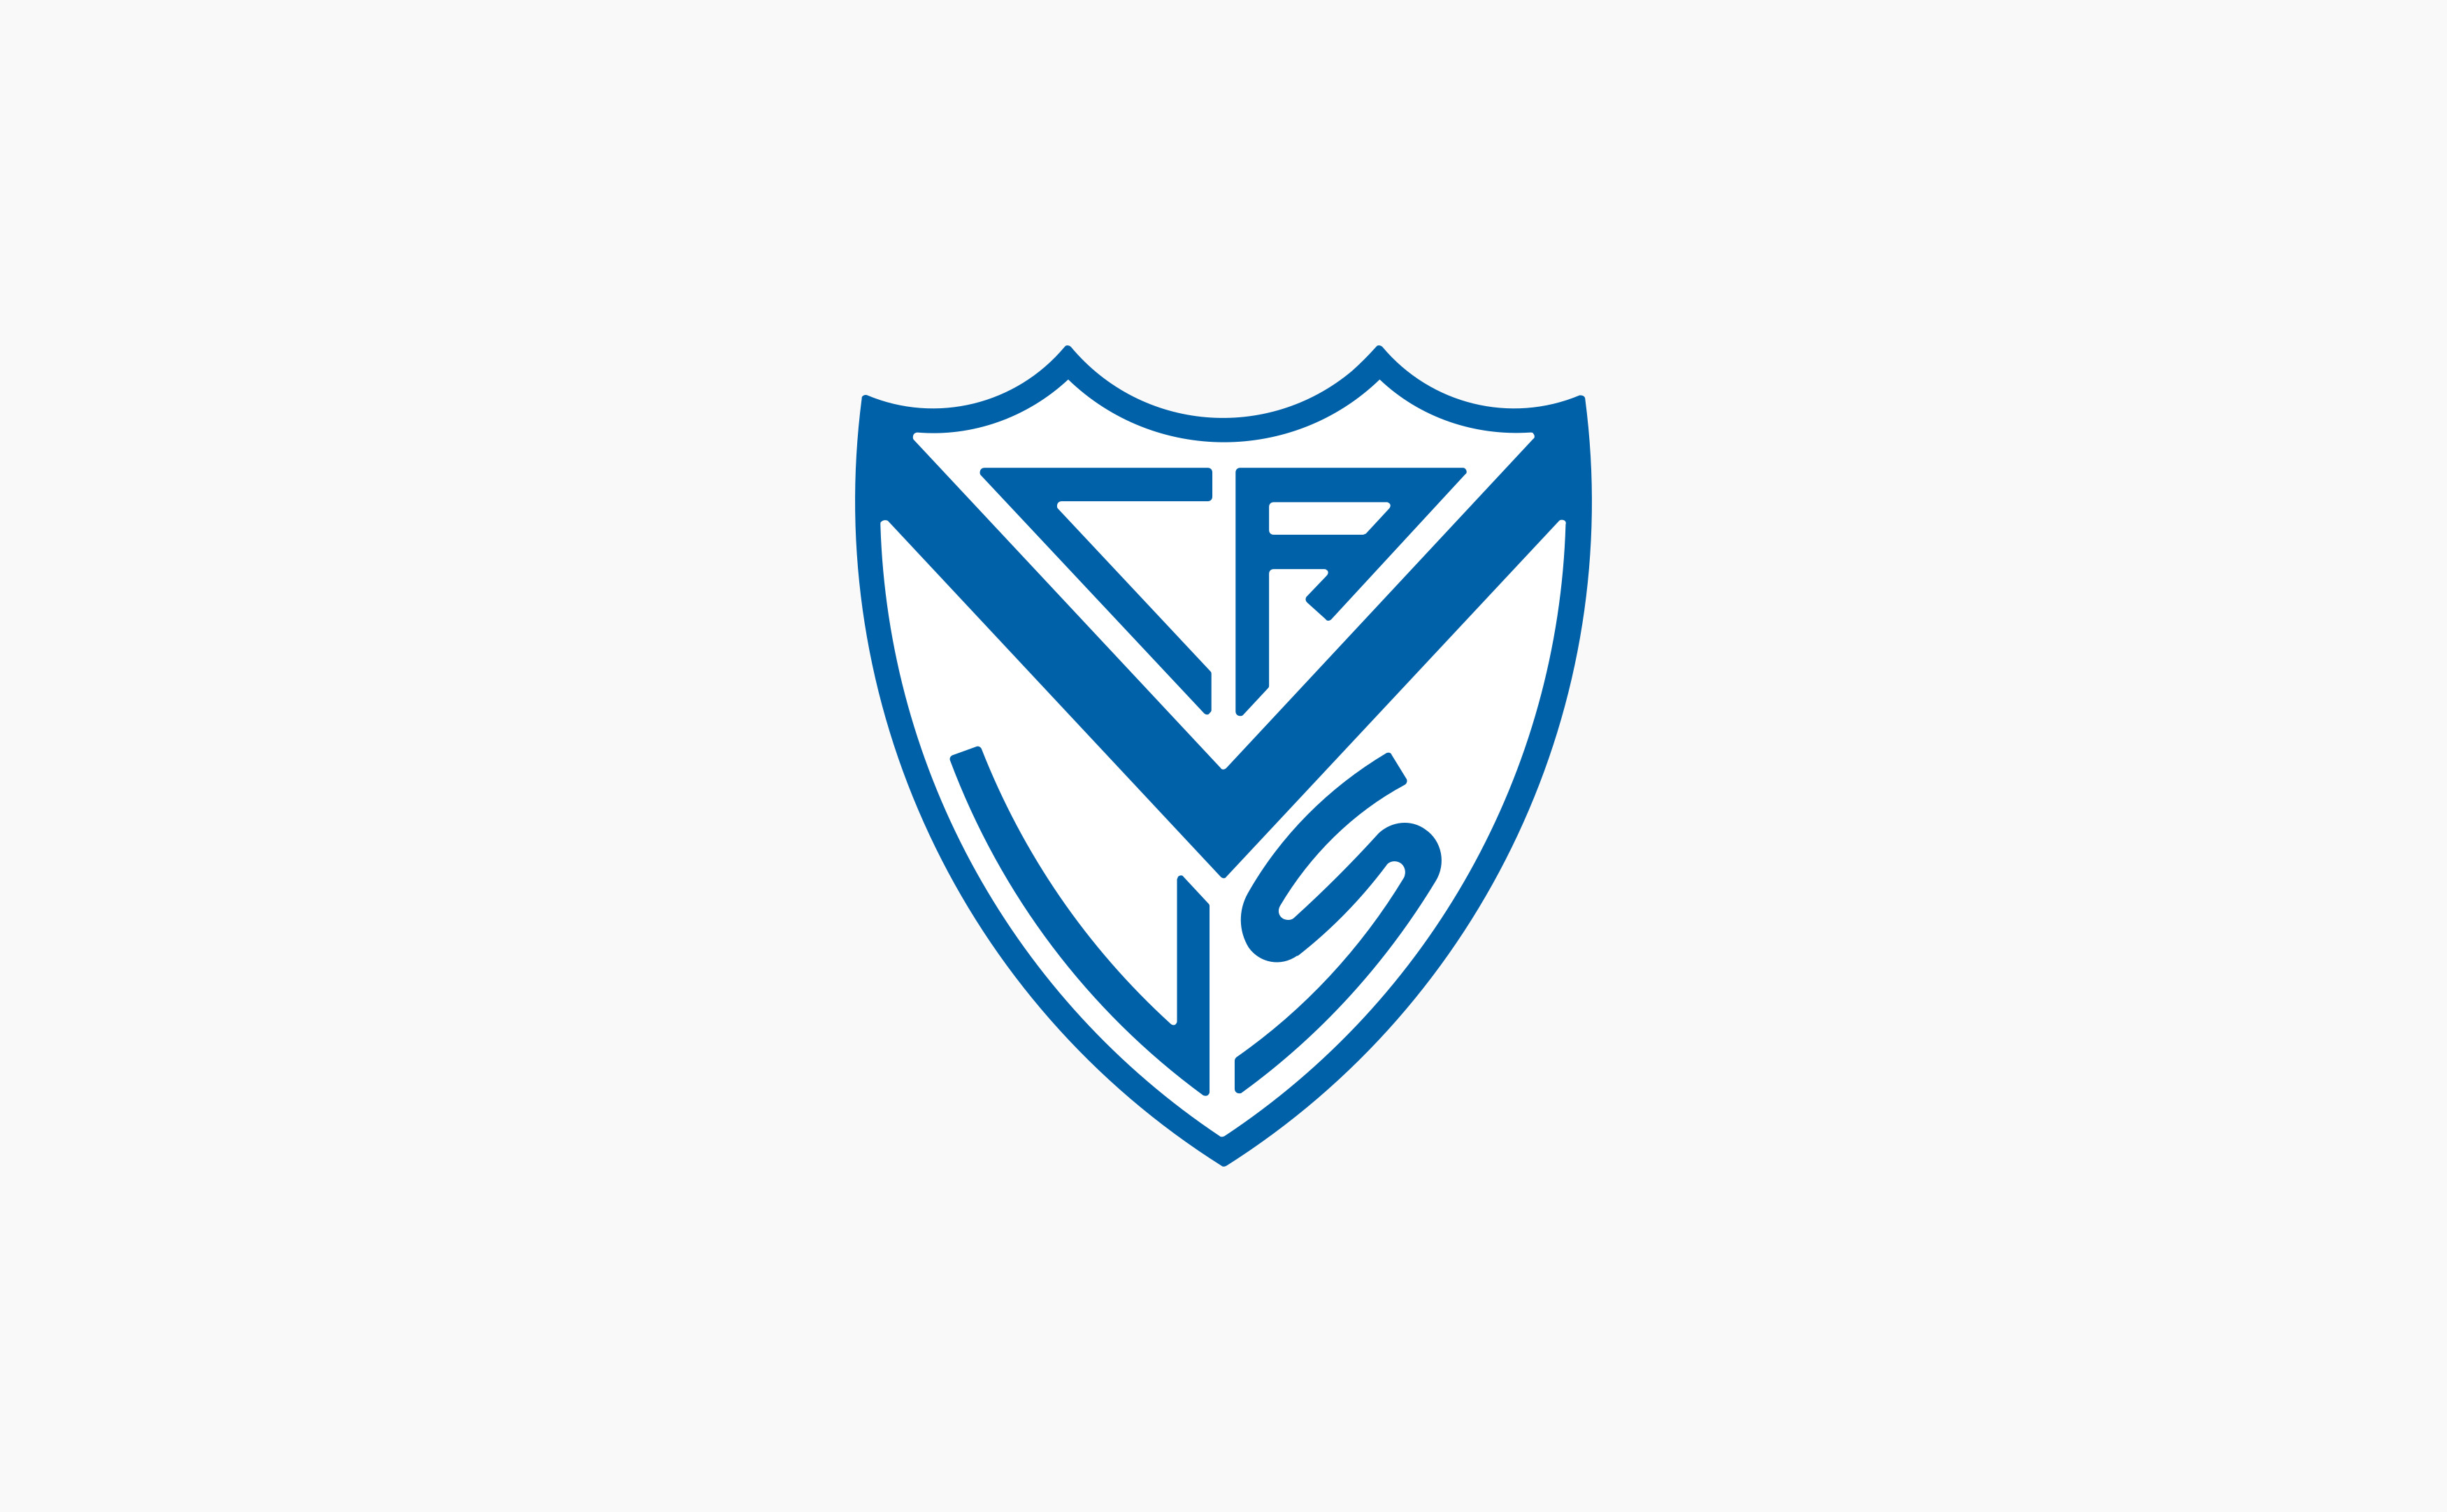 Argentine football clubs: Asociación Alumni, Club Atlético Vélez